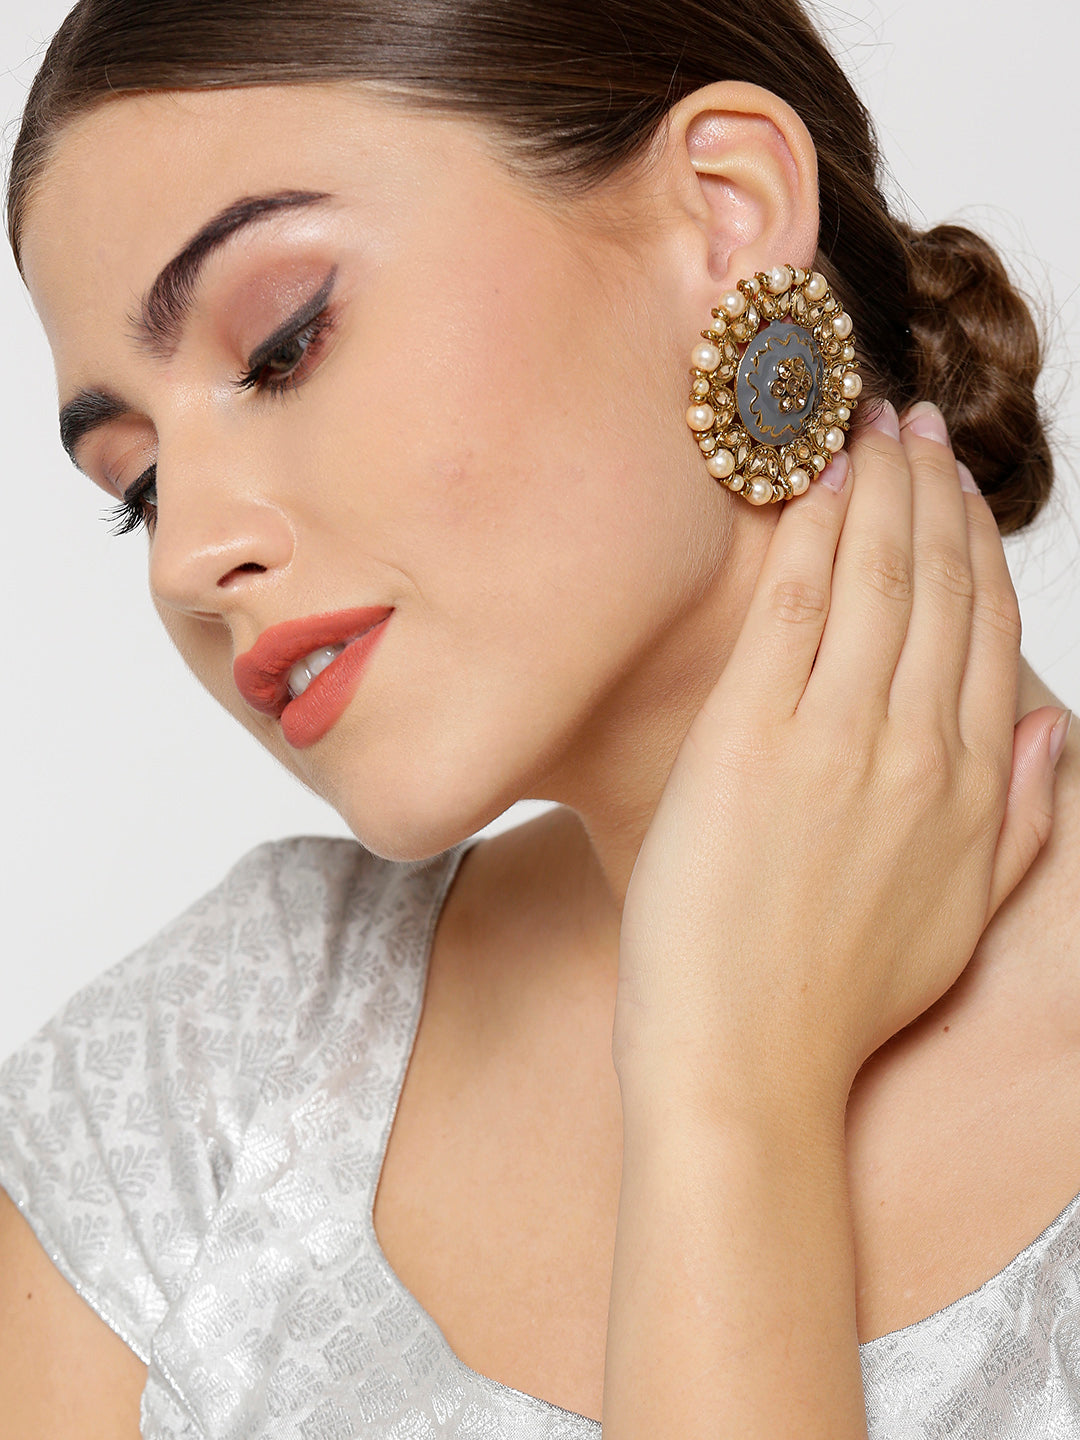 Amazon.com: Earent Rhinestone Hoop Earrings Large Silver Dangle Hoop Earring  Big Round Loops Earrings Party Ear Jewelry for Women and Girls: Clothing,  Shoes & Jewelry